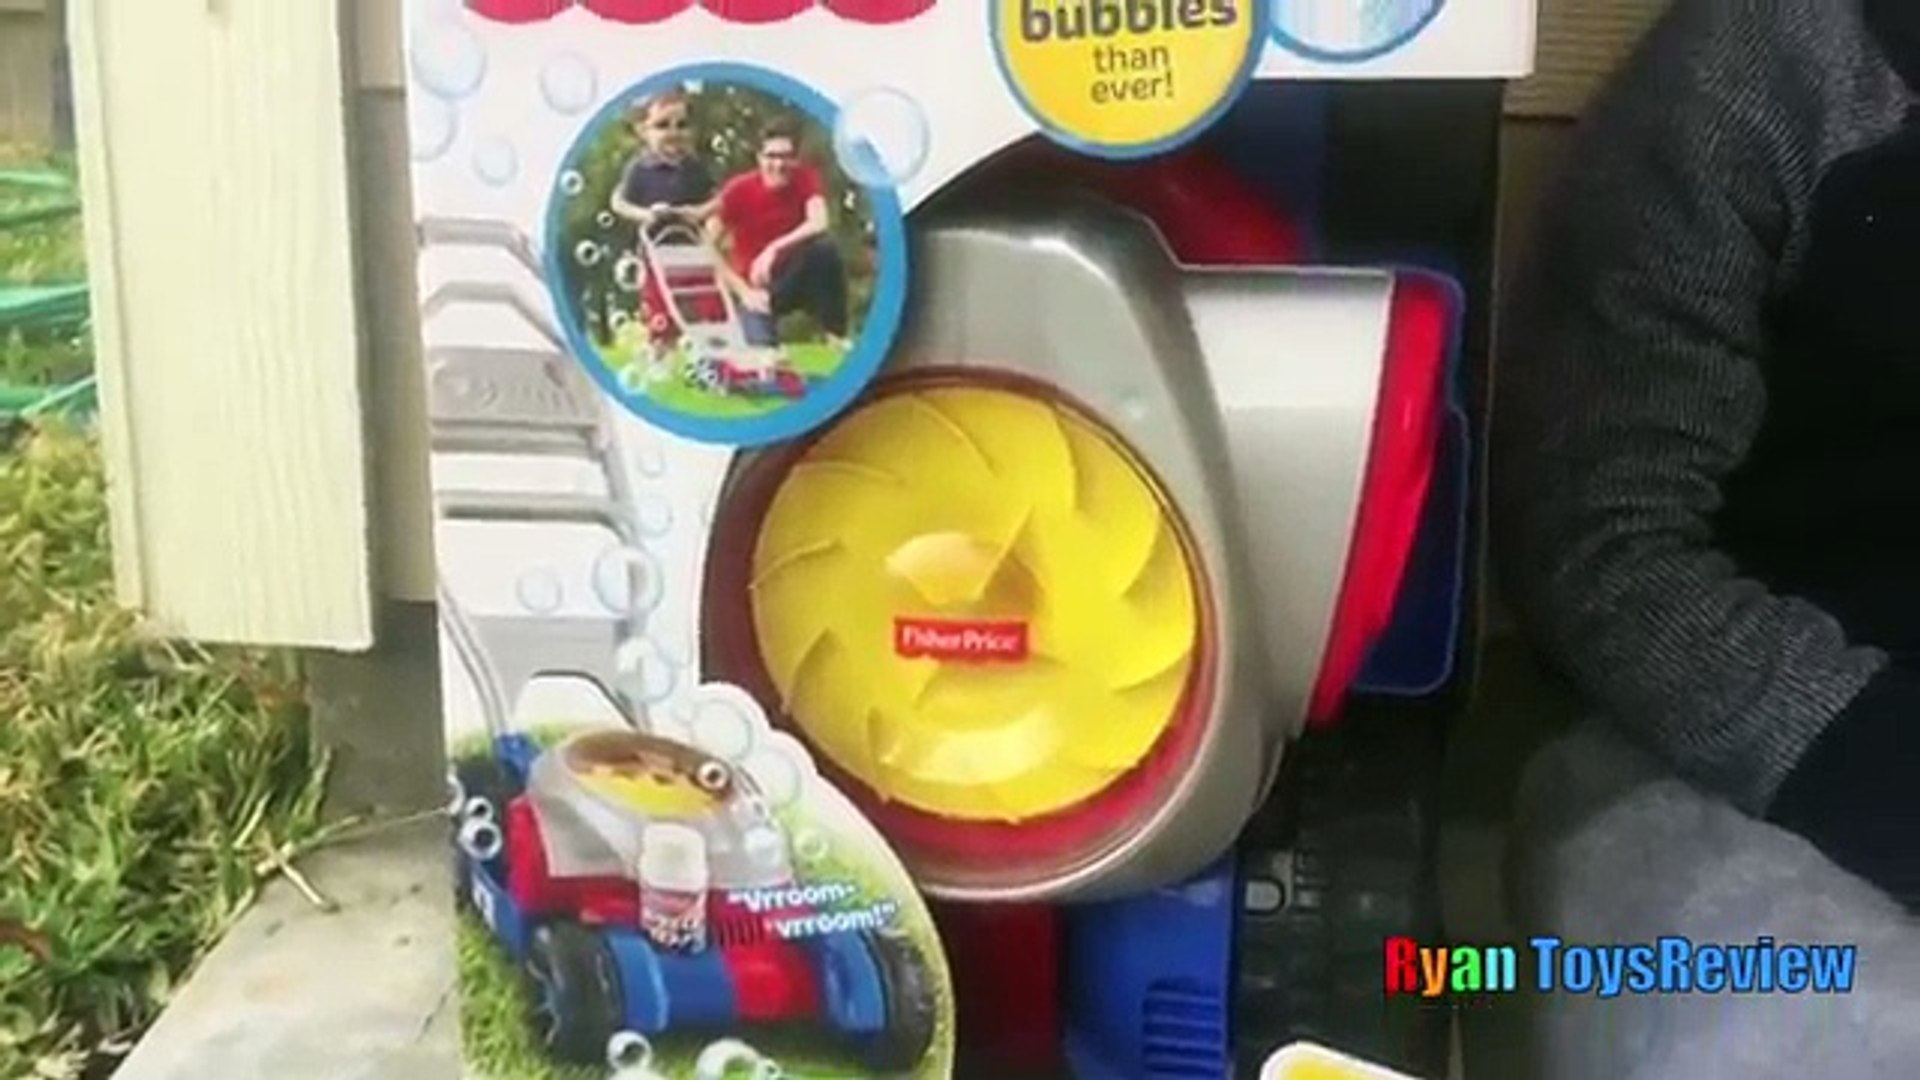 WUBBLE BUBBLE BALL Complications! Fun Activity for kids Bubble Machine Playtime Kids Toys